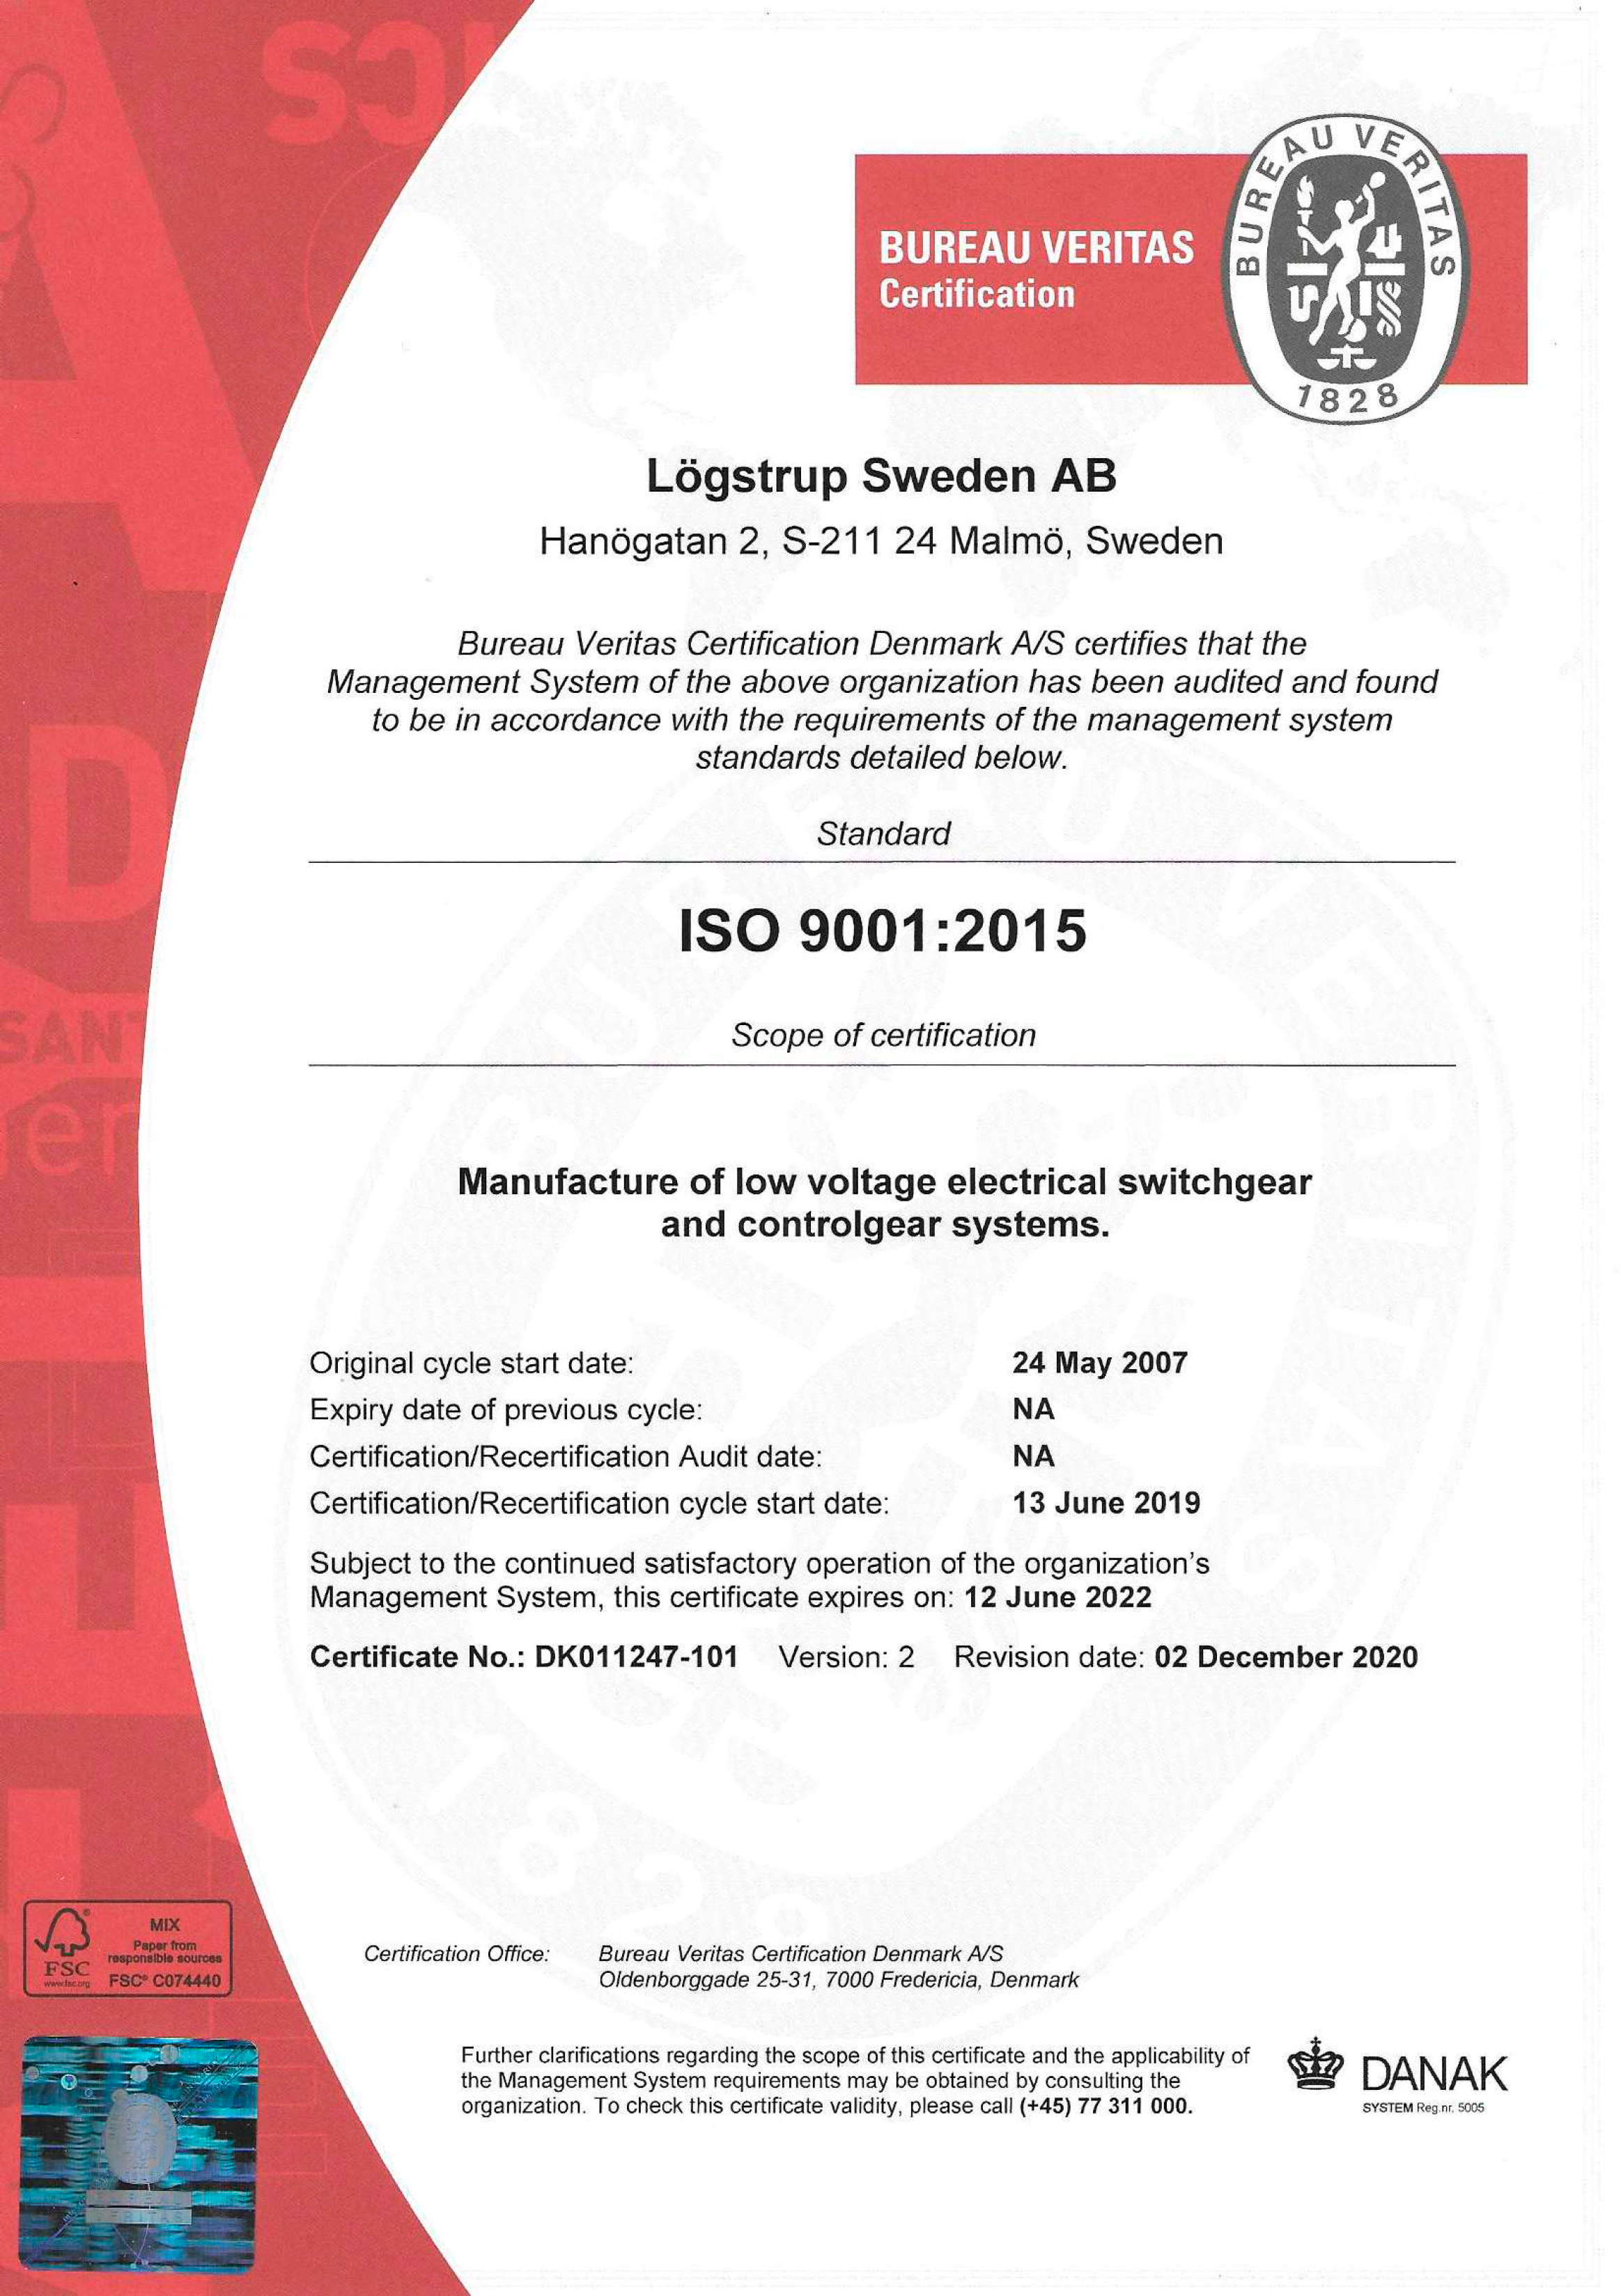 ISO 9001:2015 certificate logstrup sweden 2020